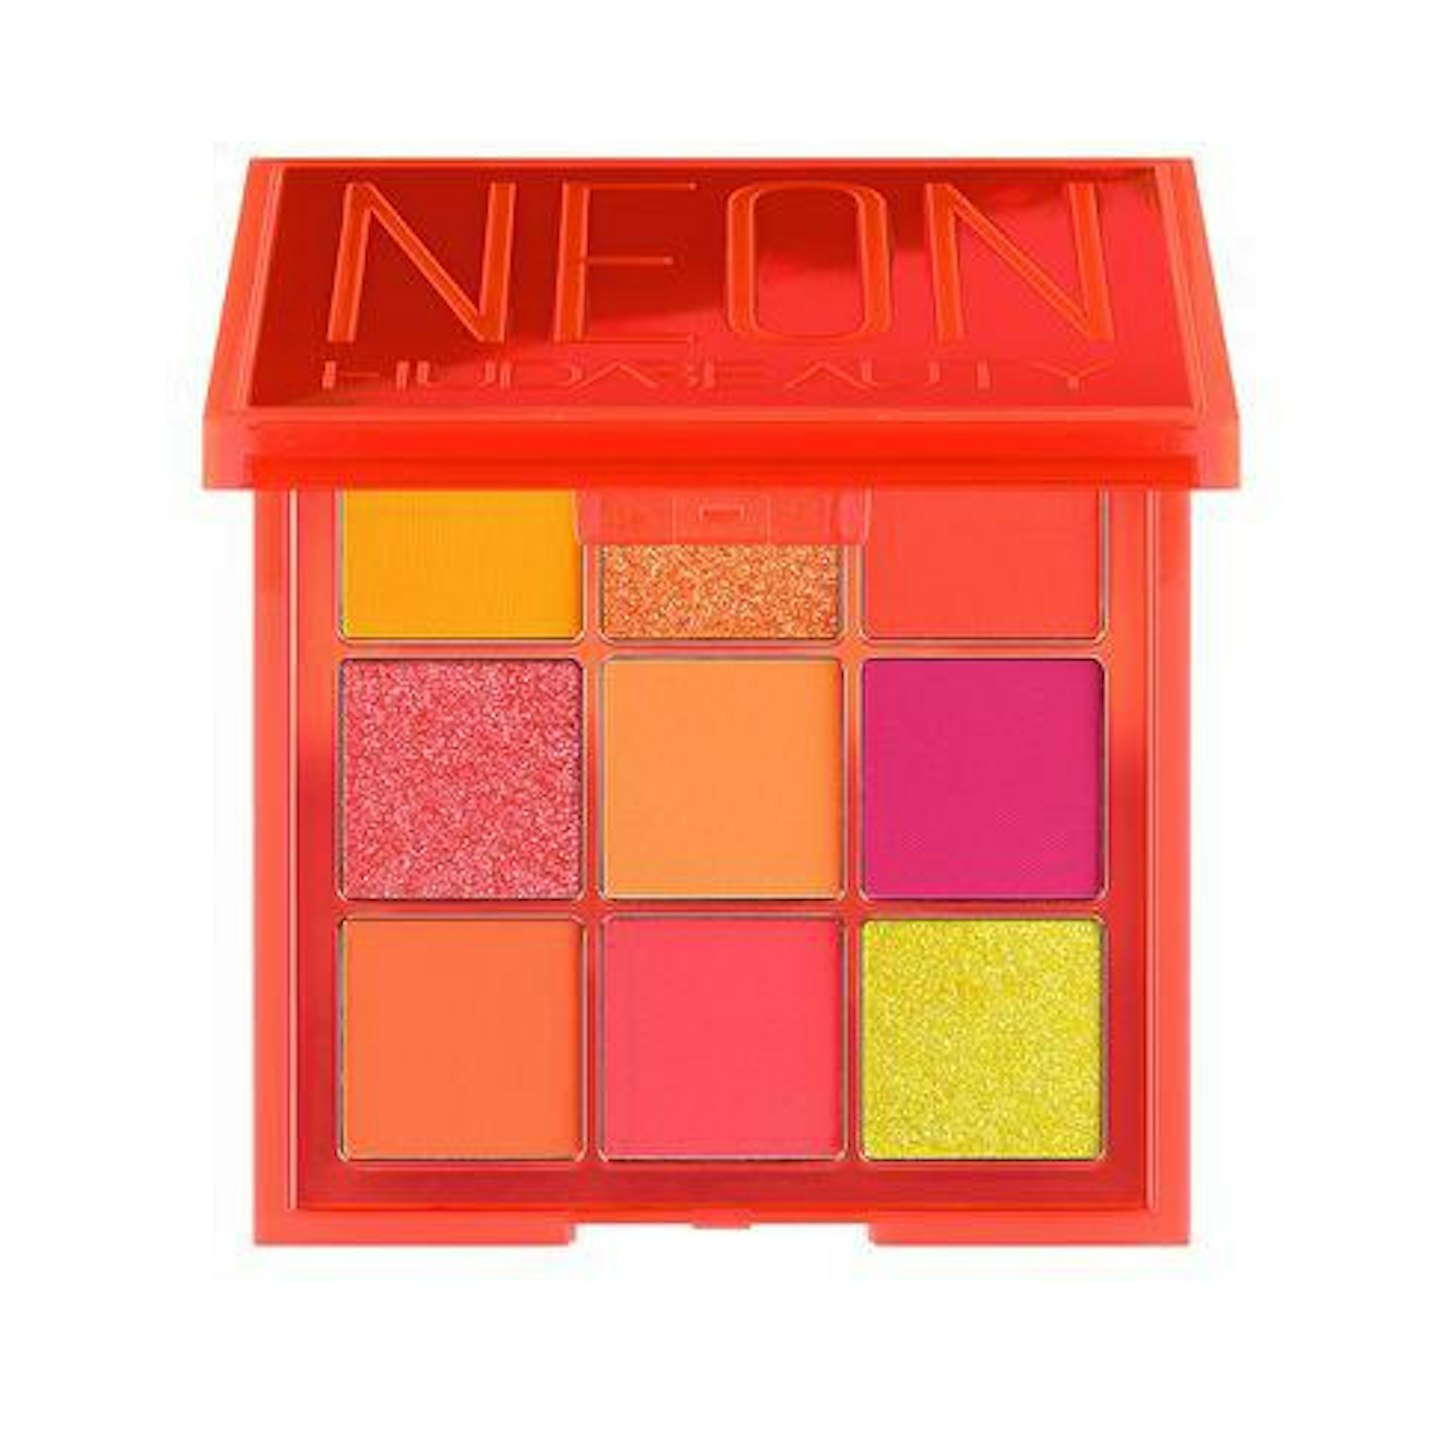 Huda Beauty Obsessions Eyeshadow Palette in Neon Orange, £27